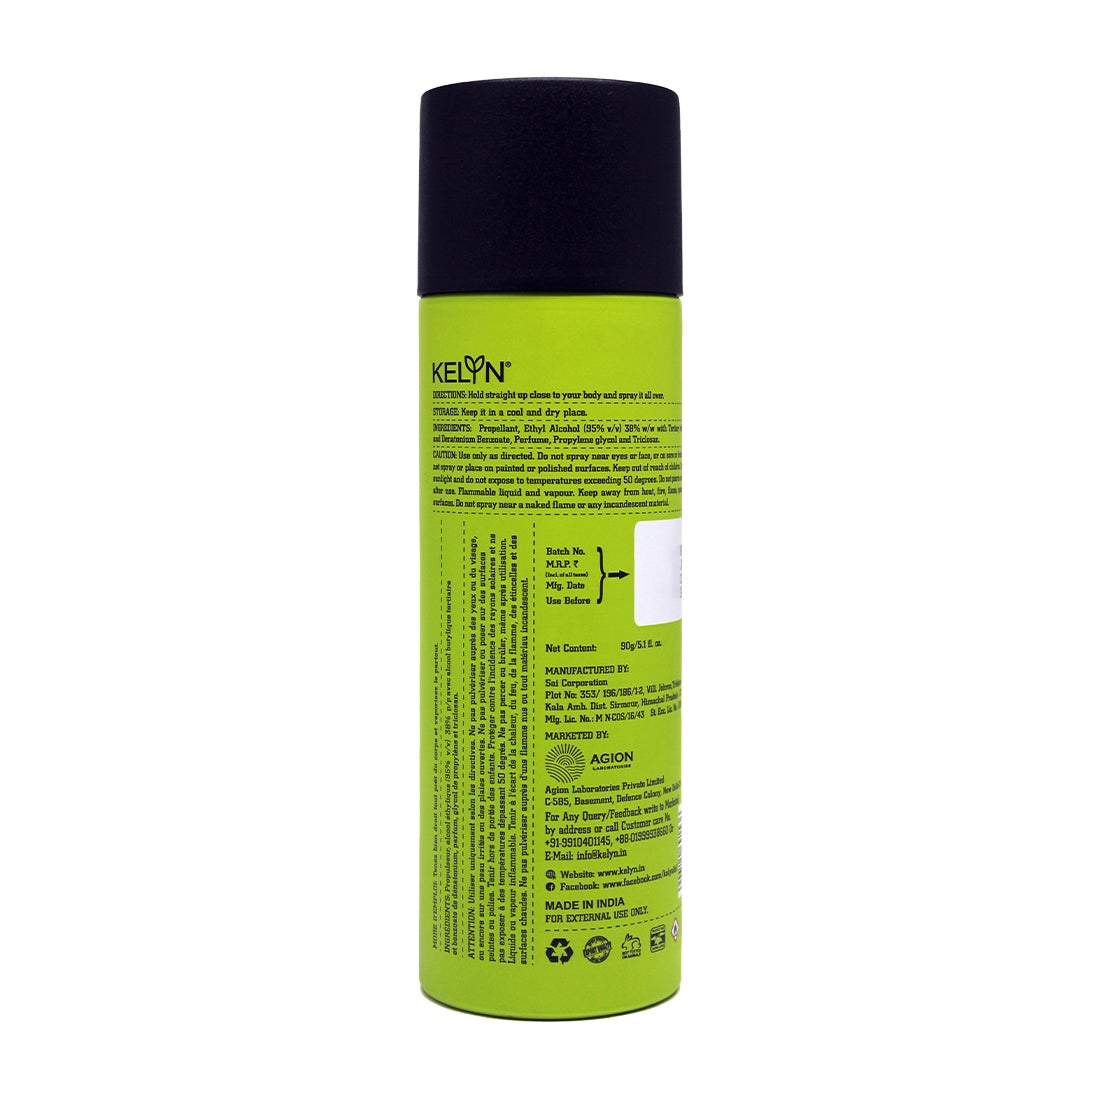 Sports Active Deodorant Body Spray, 150 ml